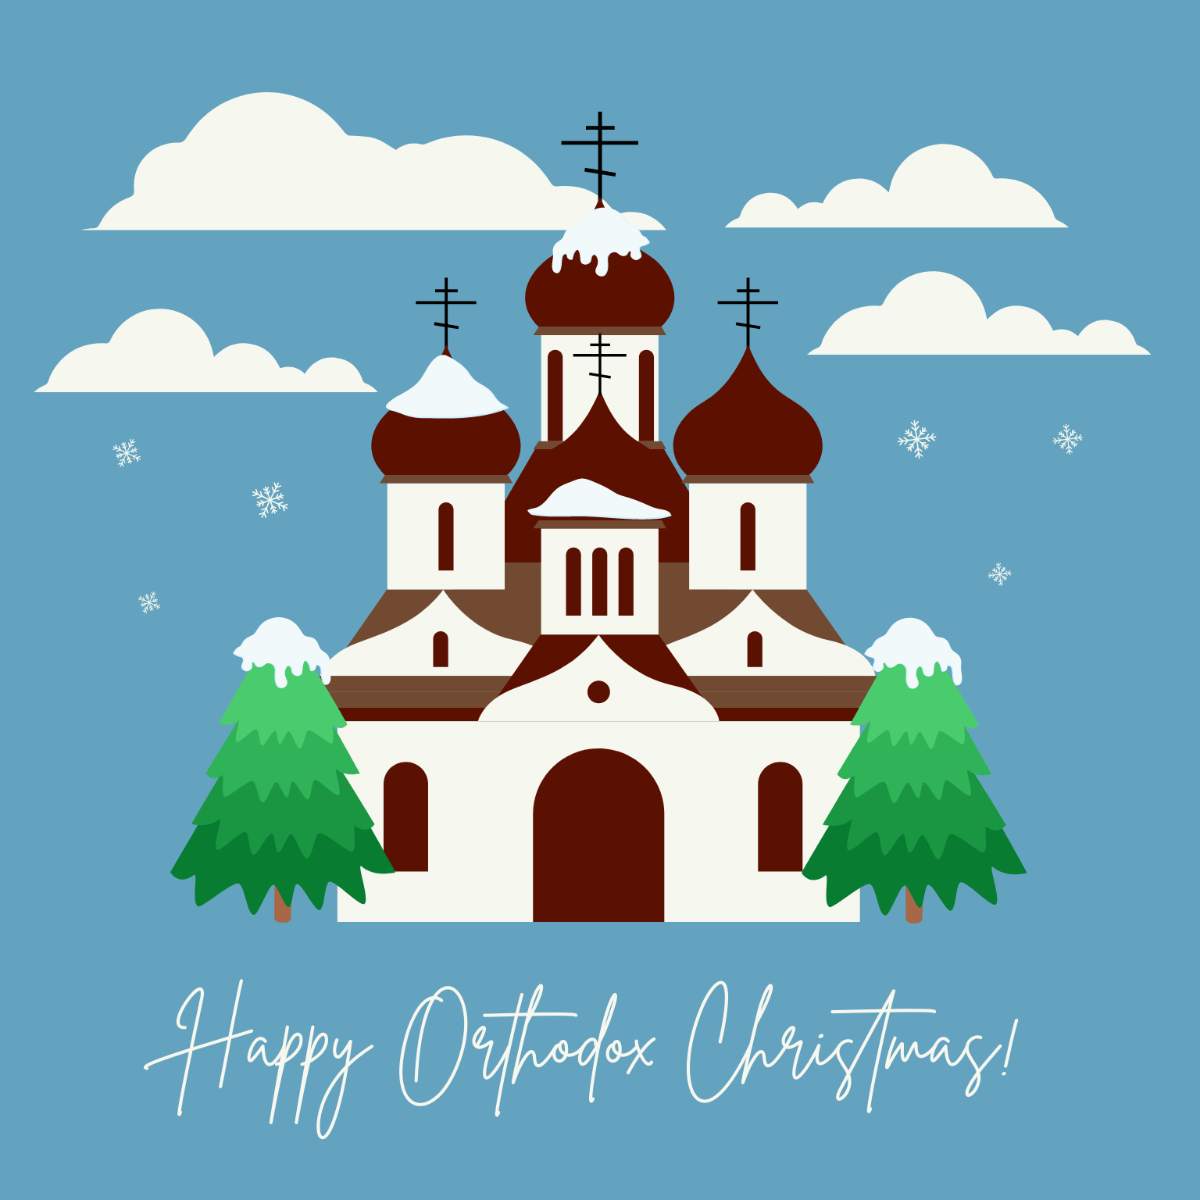 Free Happy Orthodox Christmas Illustration Template